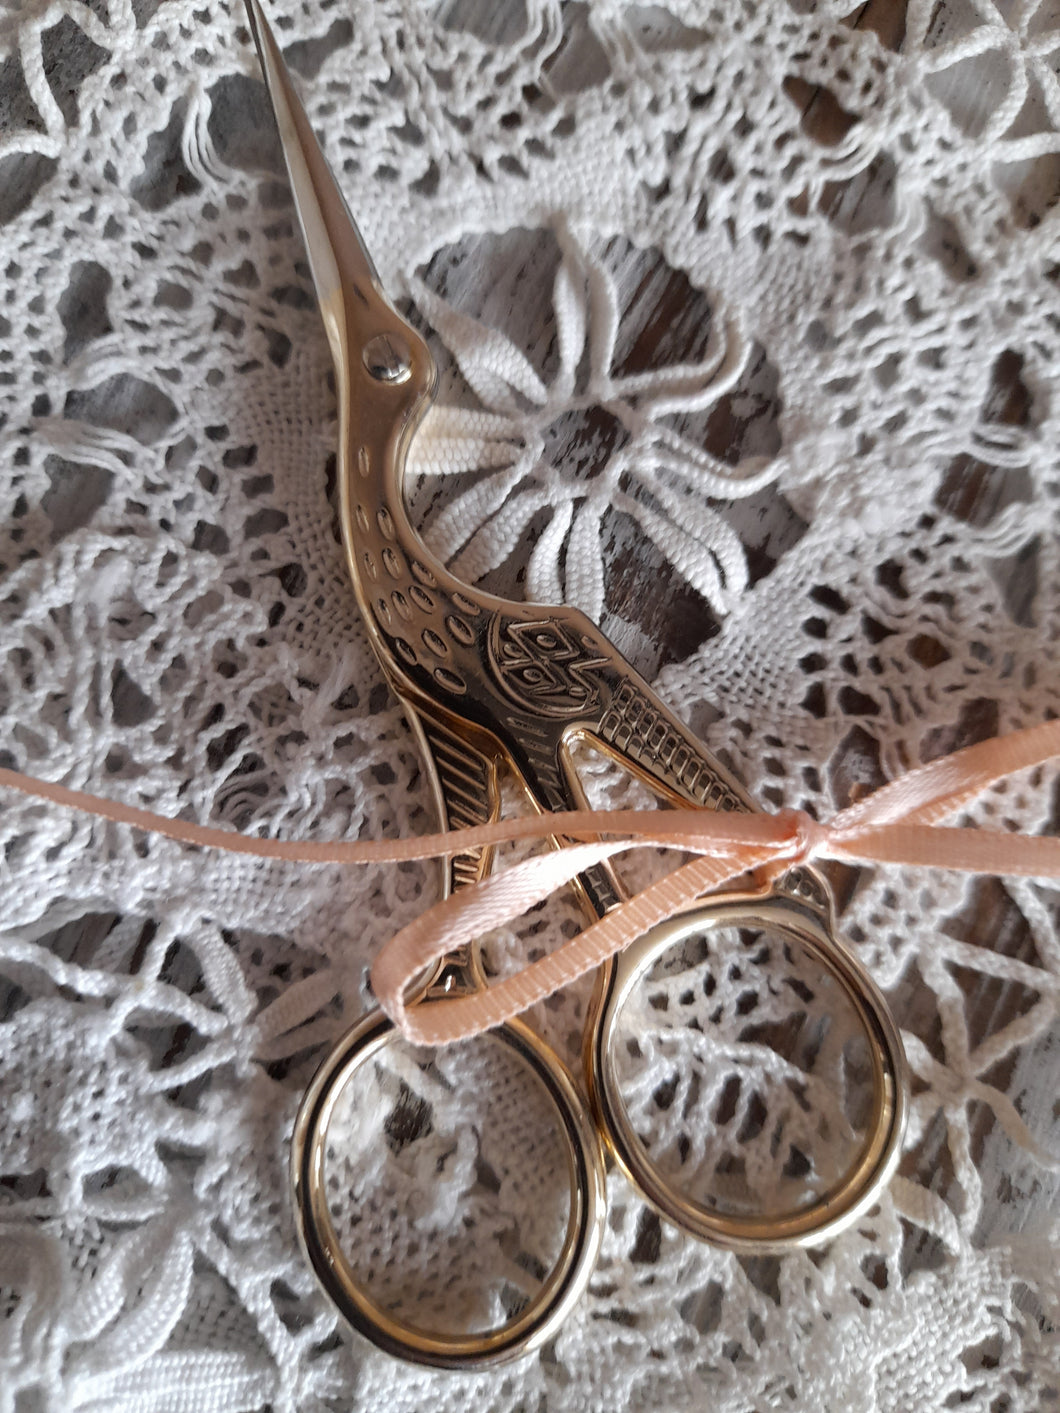 Stork embroidery scissors  -gold tone